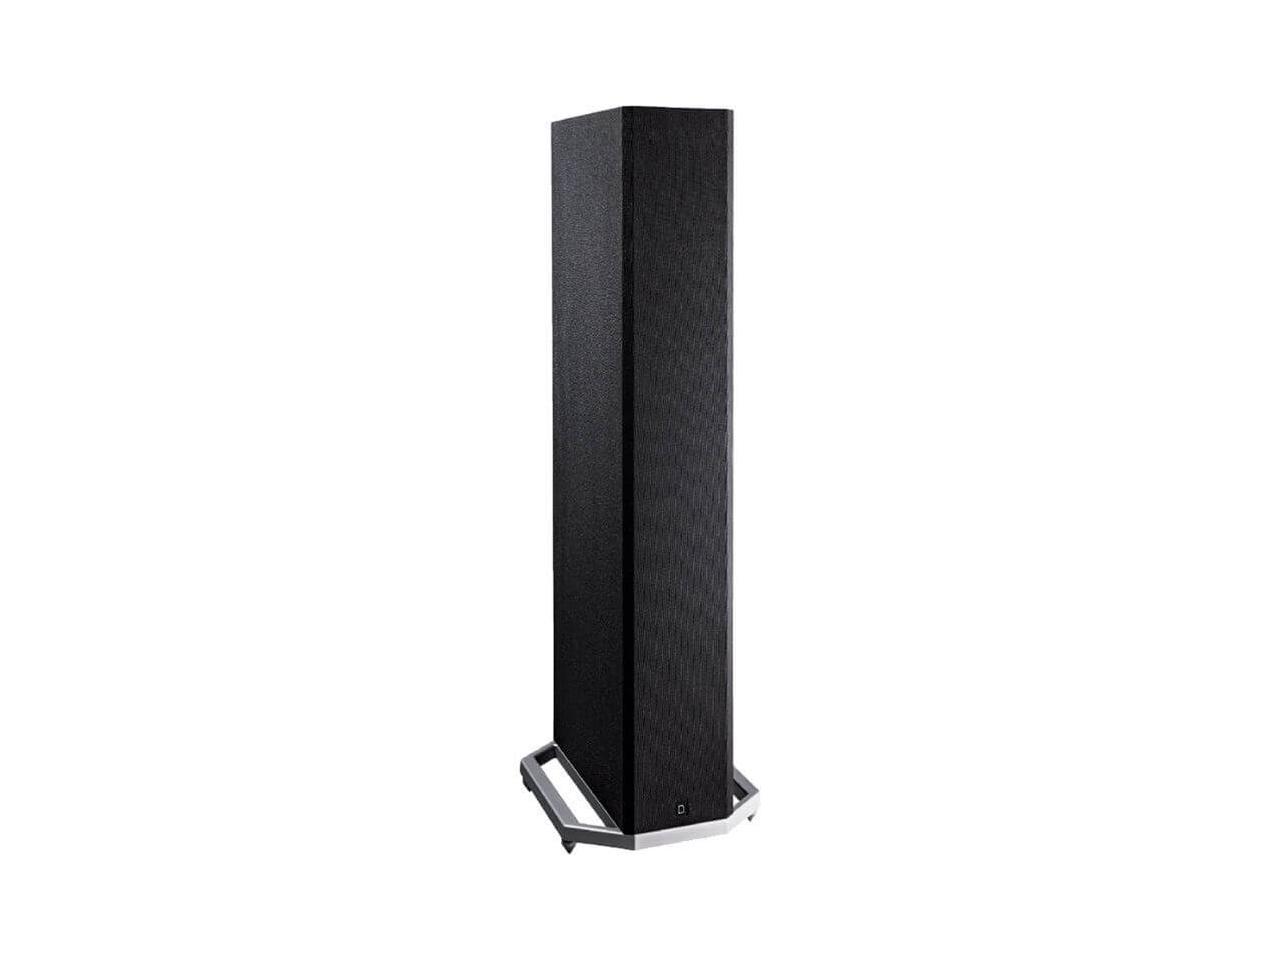 Definitive Technology BP9020 Tower Speaker $300 (Single) + free s/h